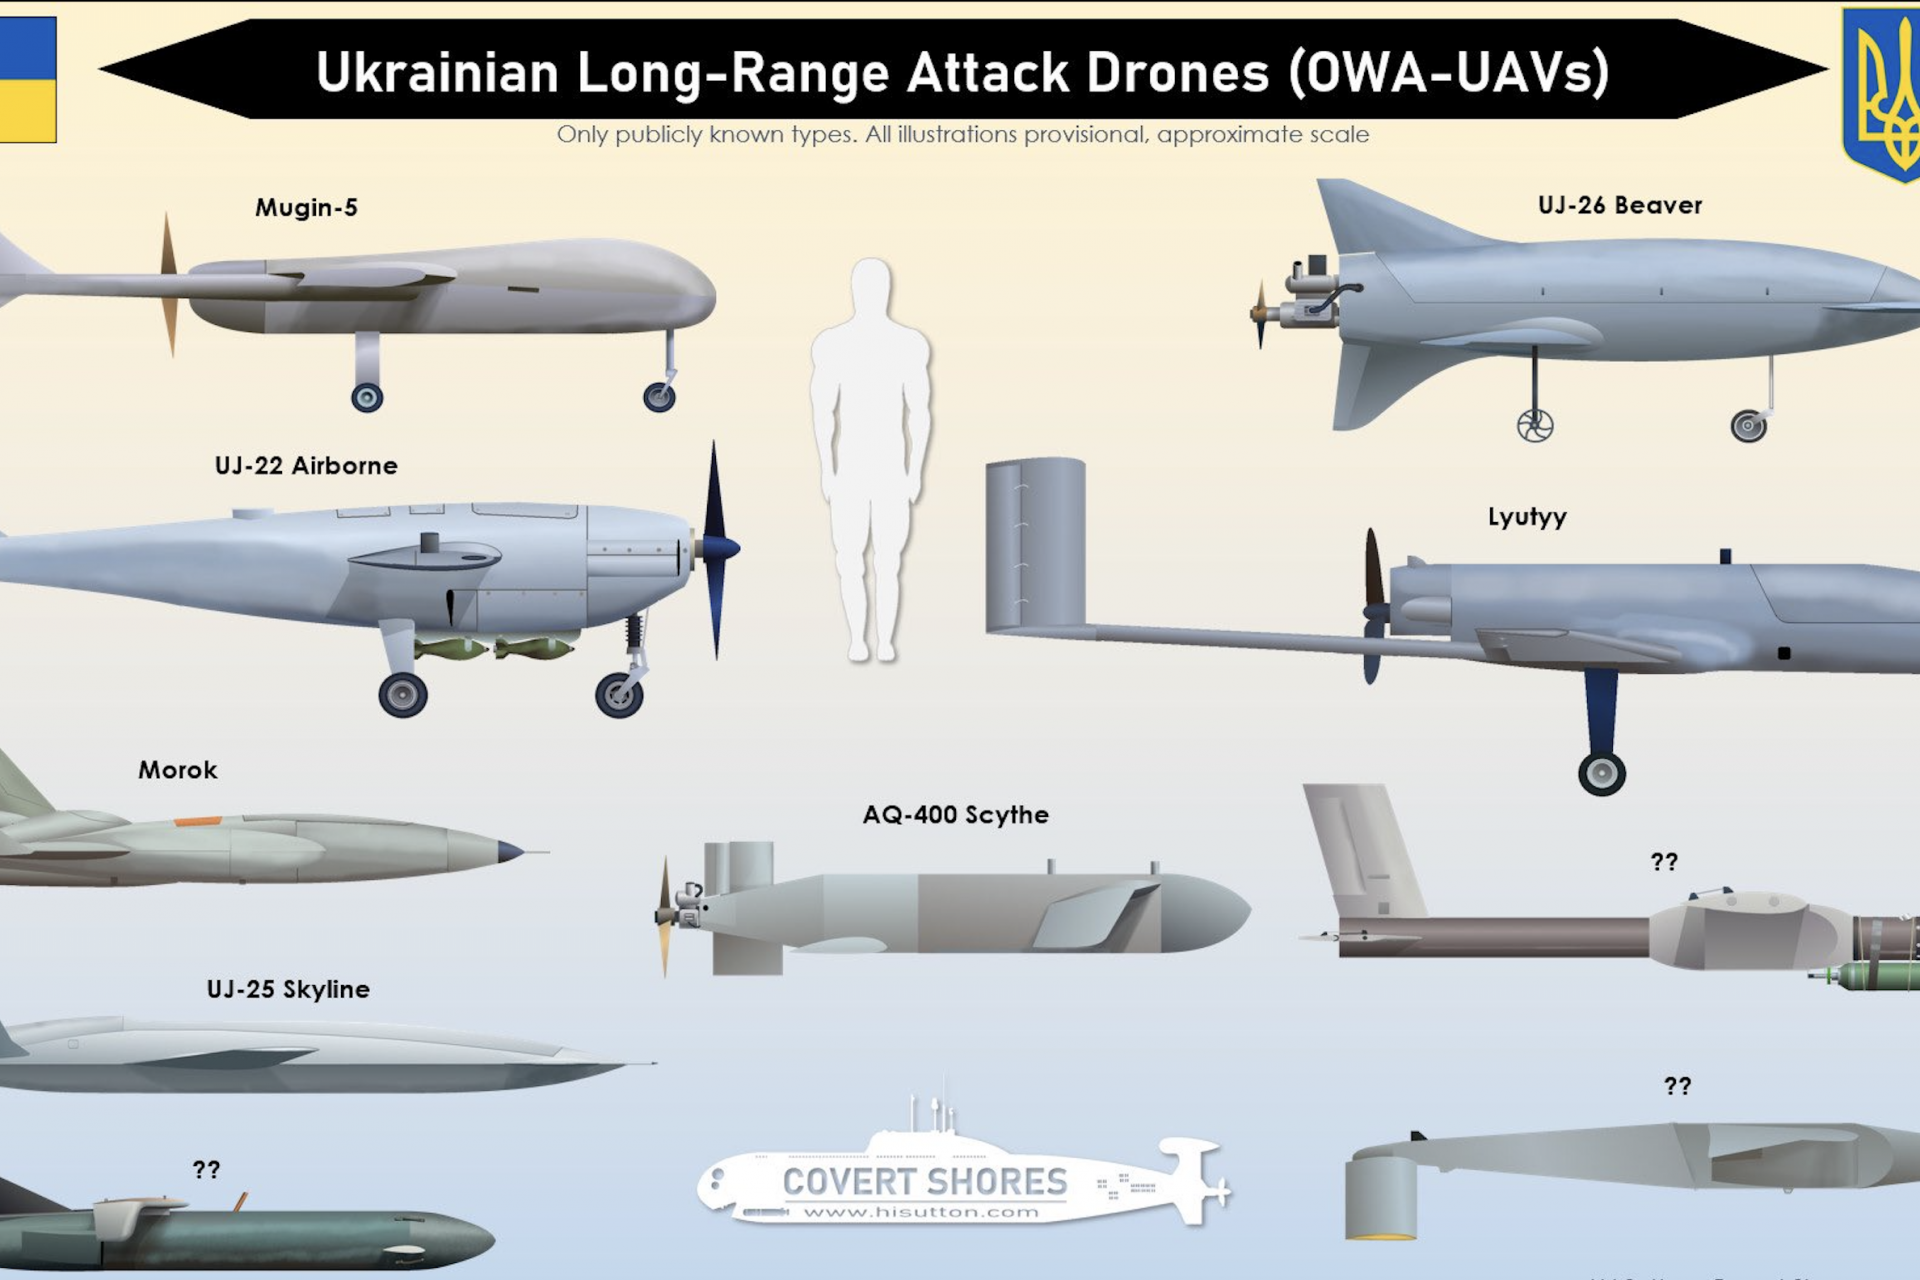 The longest-range drone in Ukraine’s arsenal?